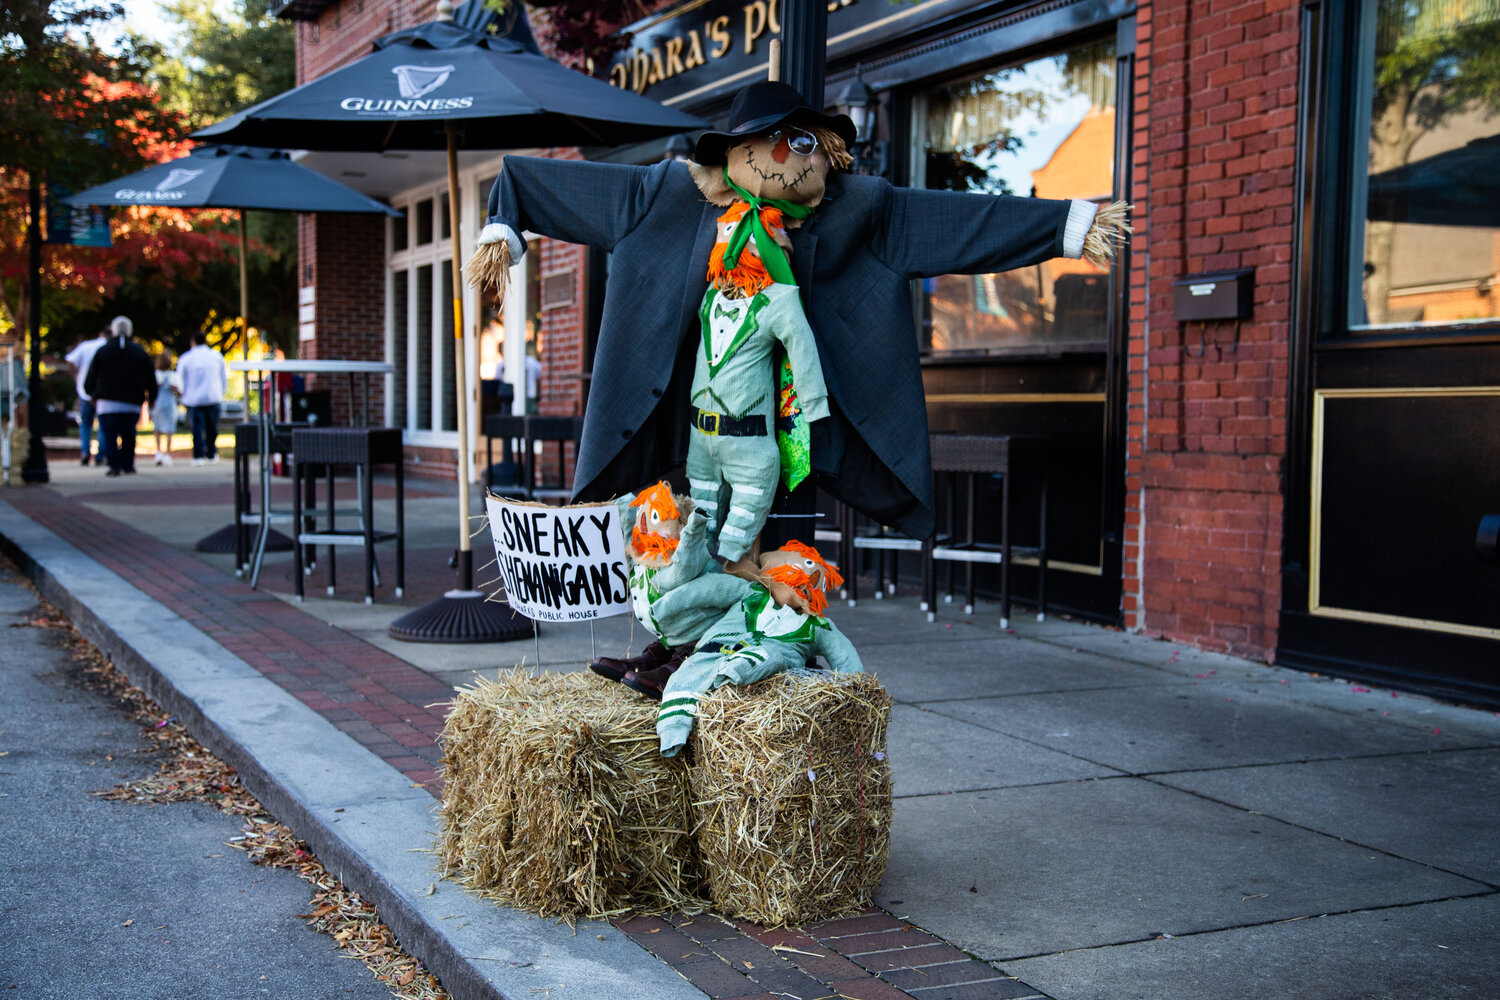 The O'Hara's Public House entry into the Town of Lexington's downtown scarecrow contest